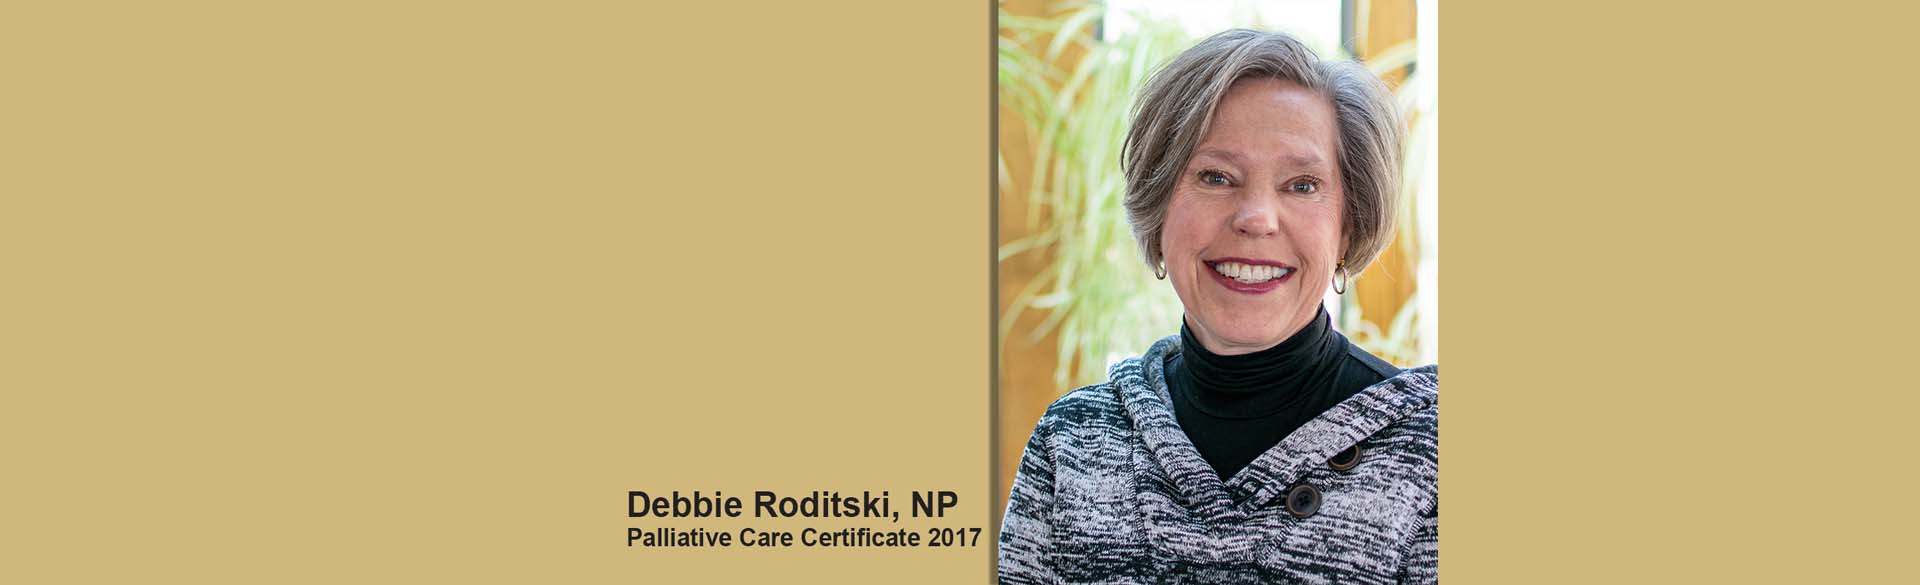 Debbie Roditski, NP earns her Palliative Care Certificate